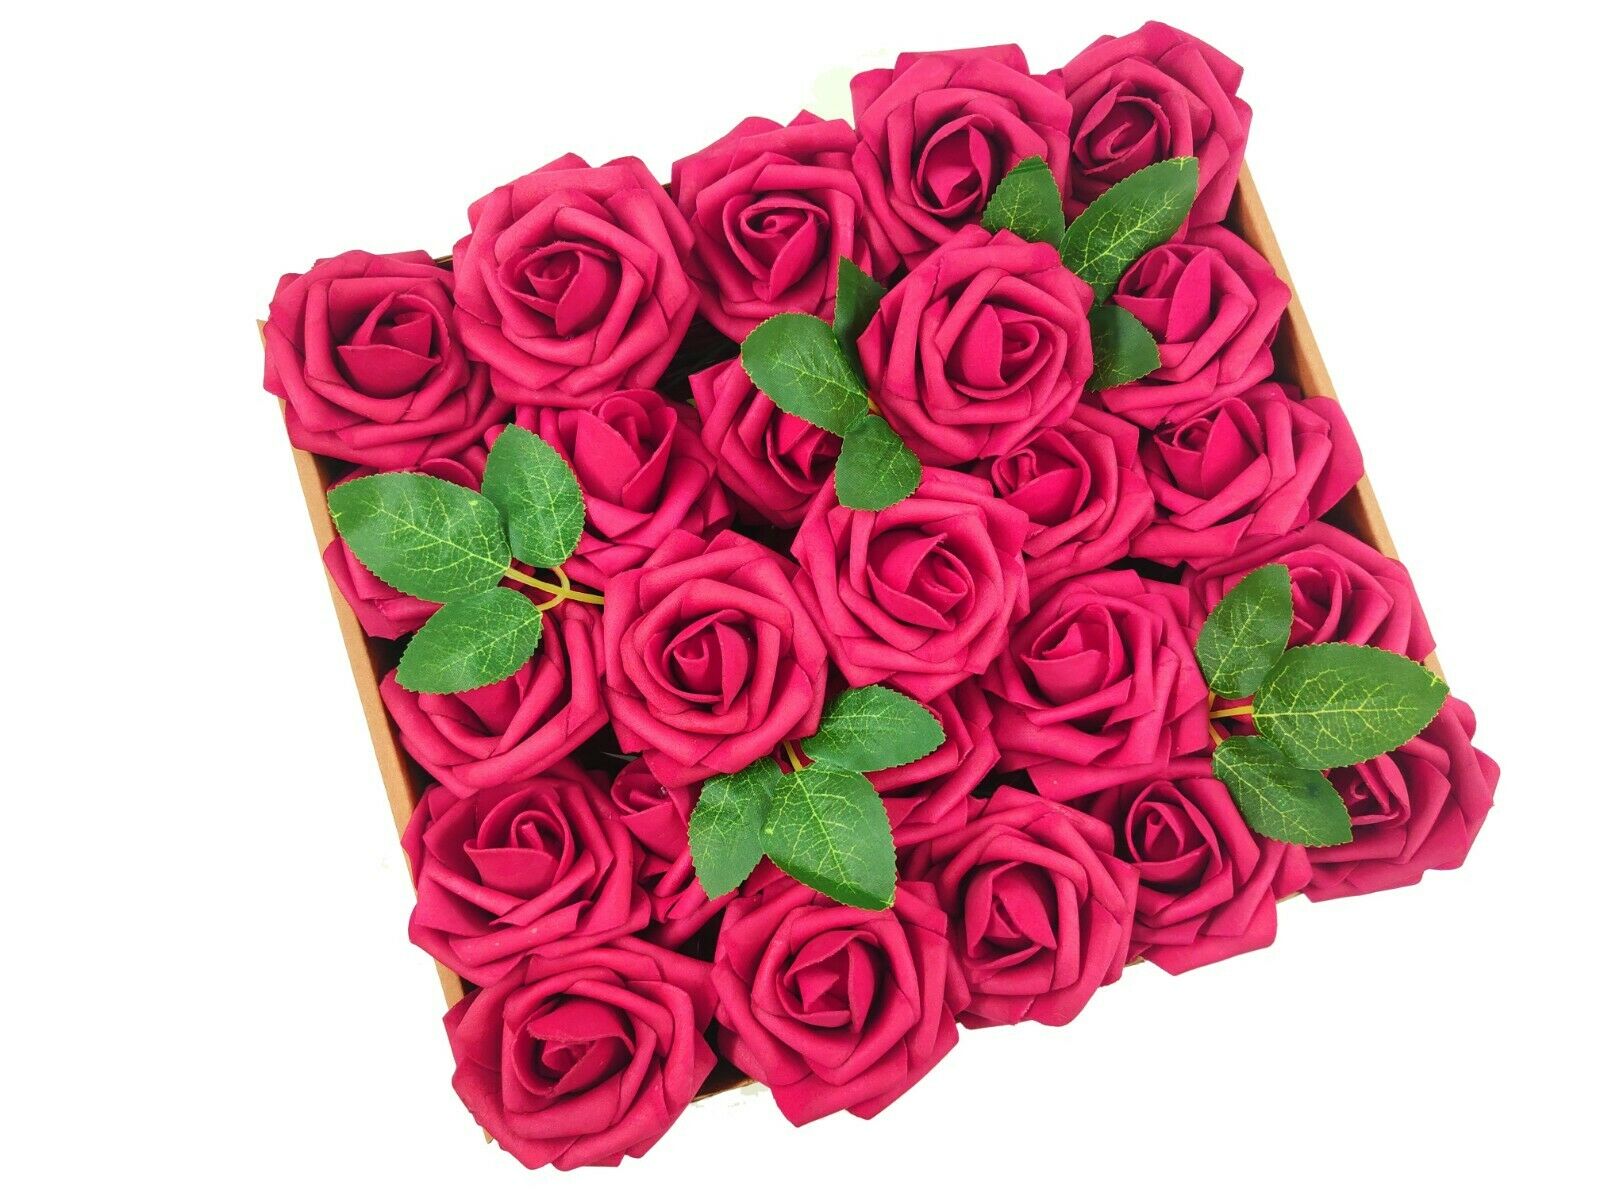 Us 50pcs Fuchsia Artificial Flowers Foam Roses Decoration Diy For Wedding Party